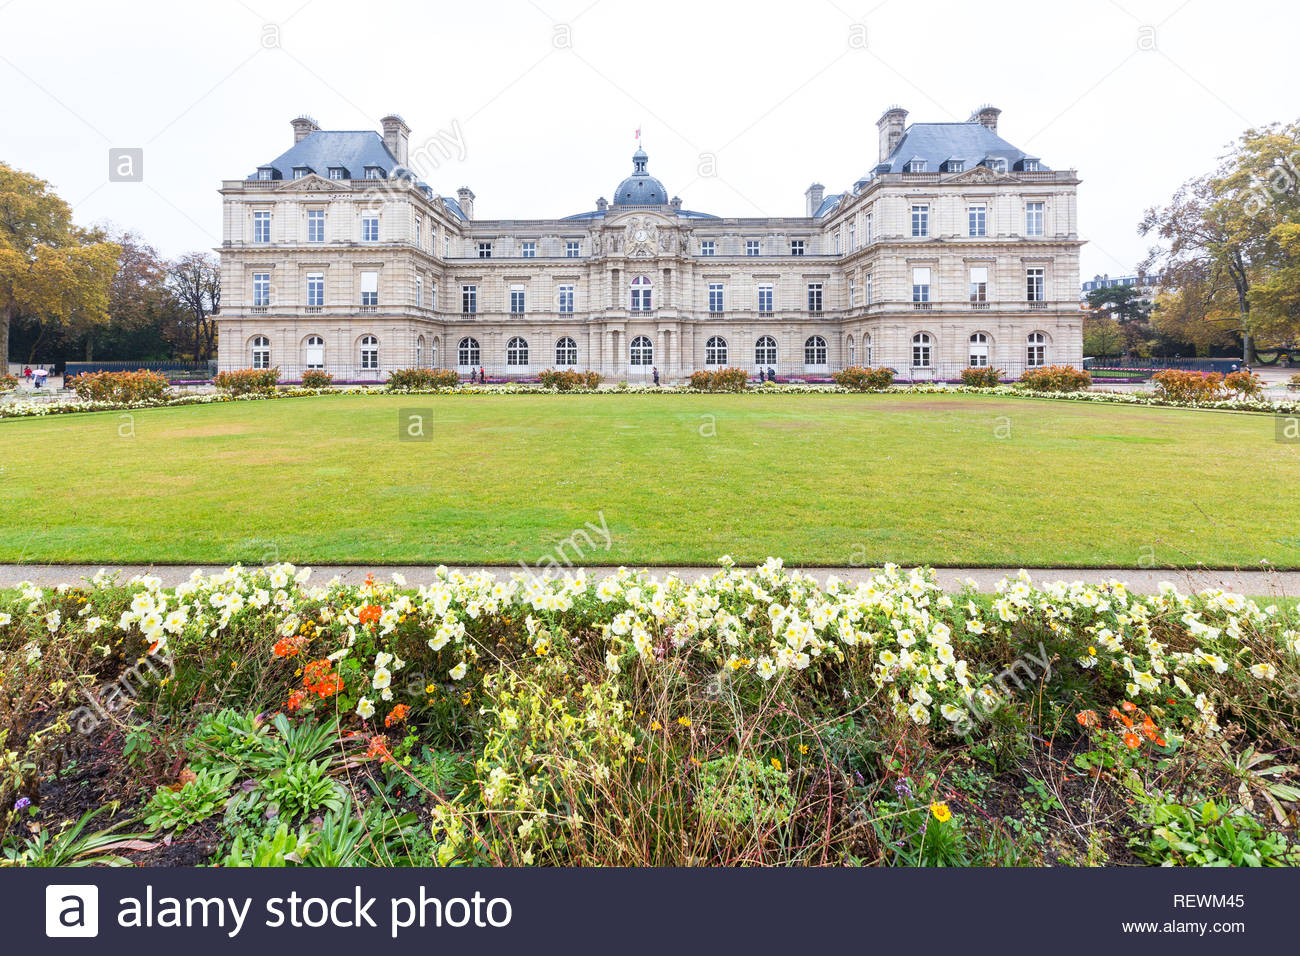 paris france luxembourg palace in luxembourg garden jardin de luxembourg REWM45